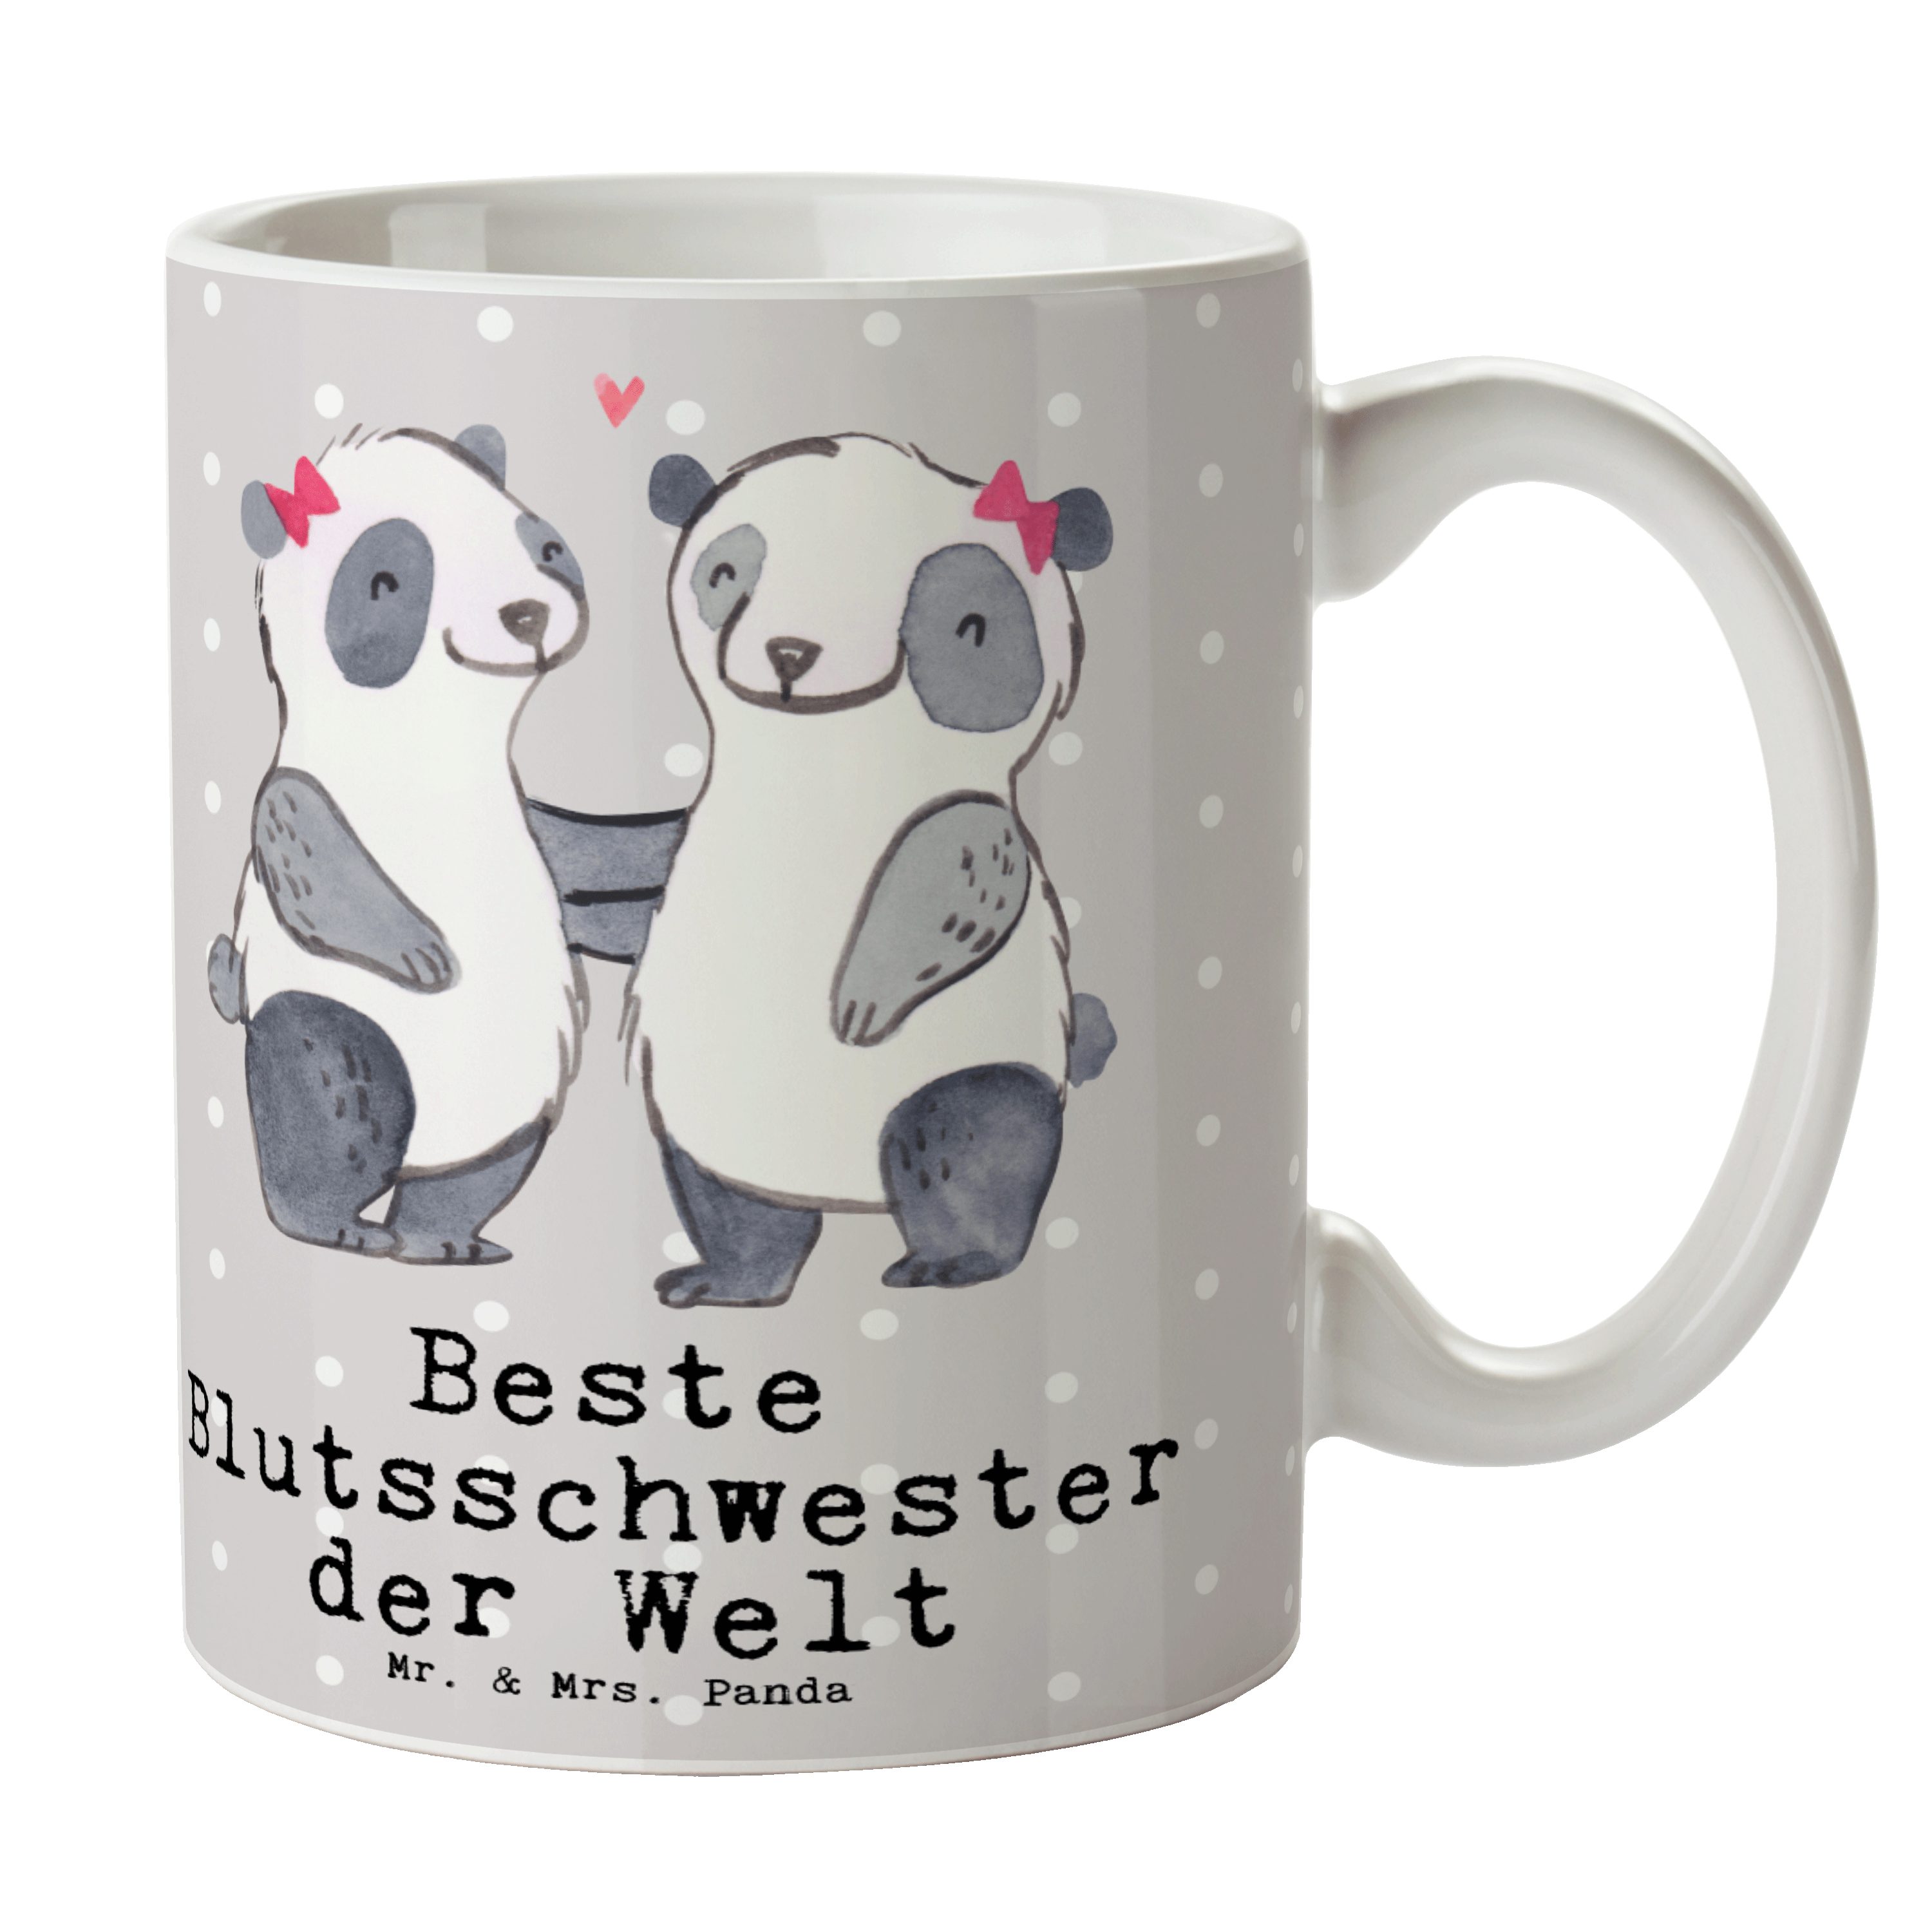 Mr. & Mrs. Panda Tasse Panda Beste Blutsschwester der Welt - Grau Pastell - Geschenk, Geschw, Keramik